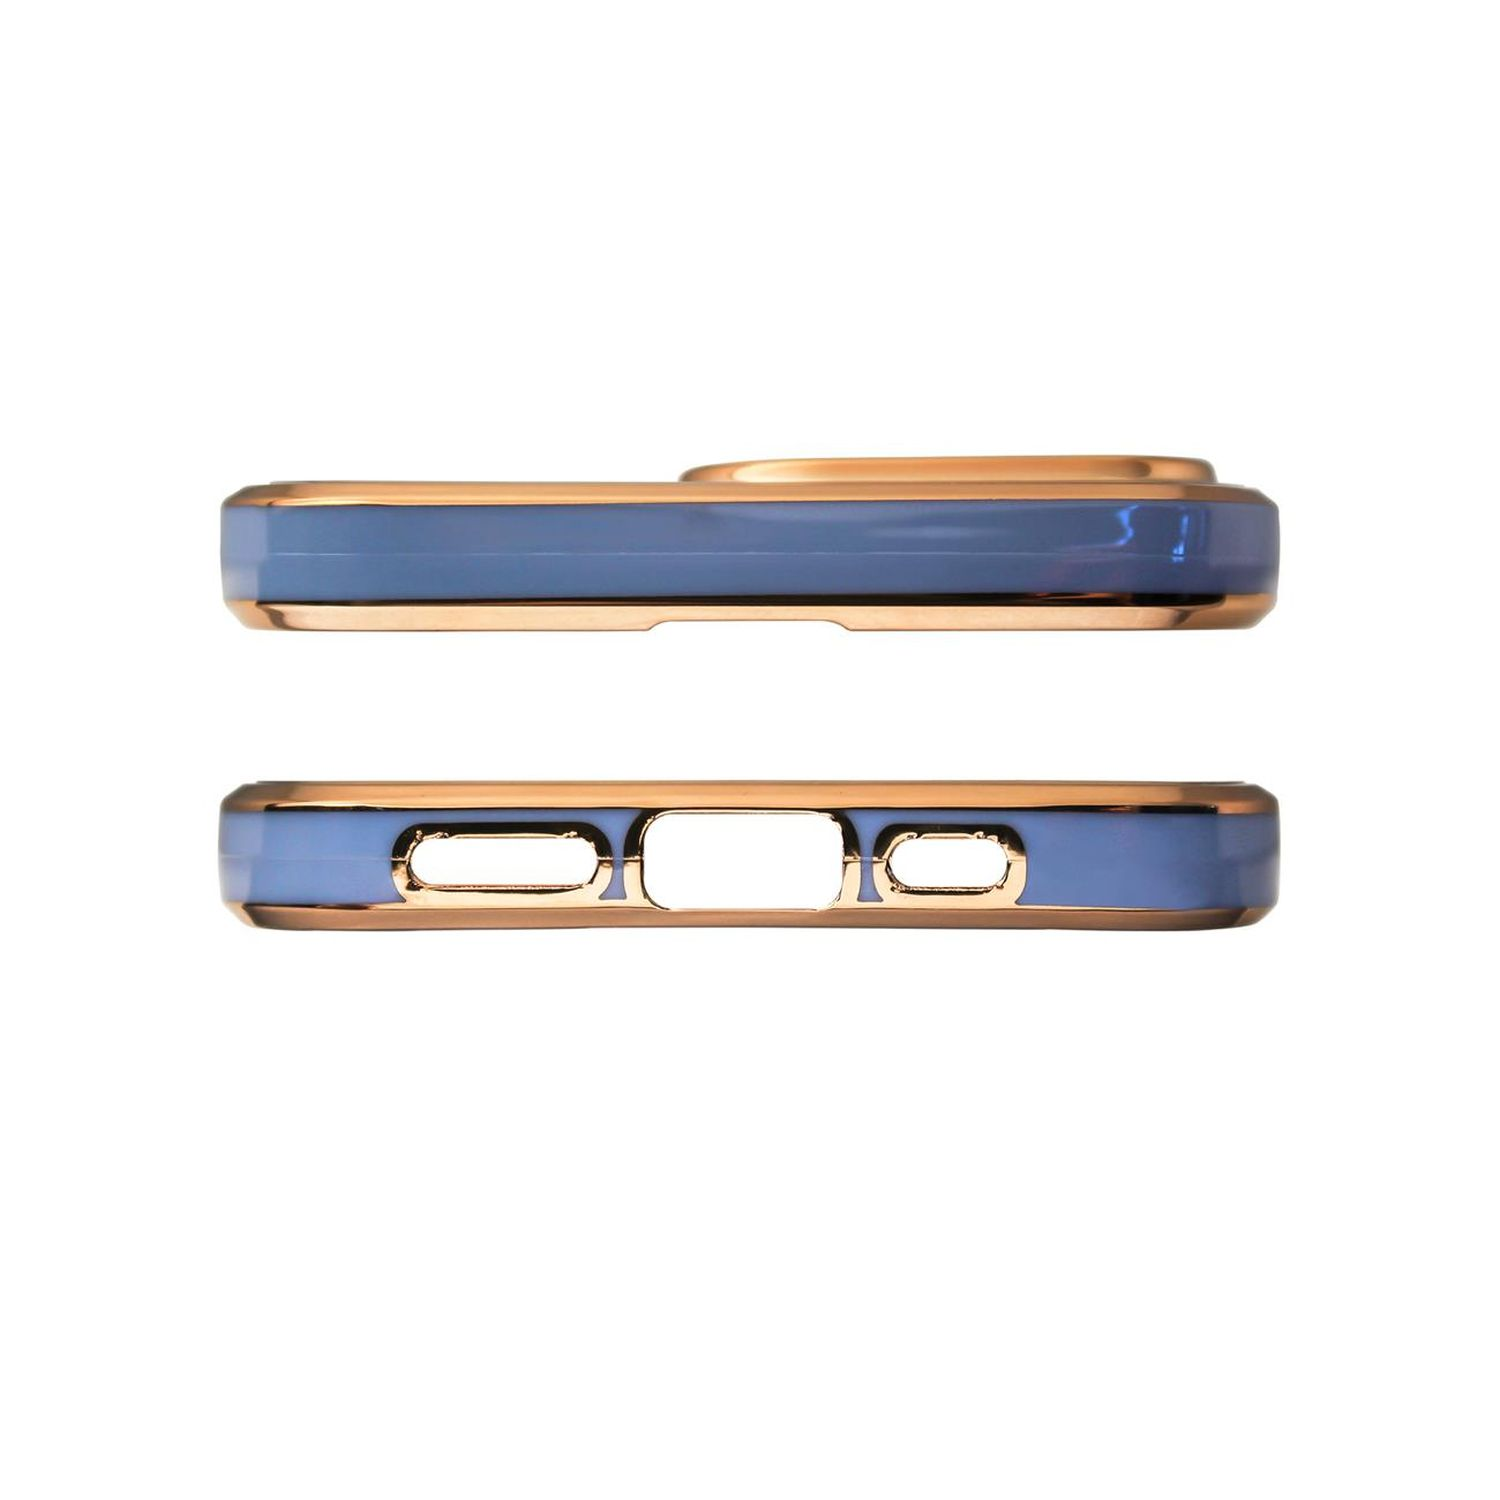 Color COFI Blau-Gold 13, Apple, Backcover, Case, Lighting iPhone